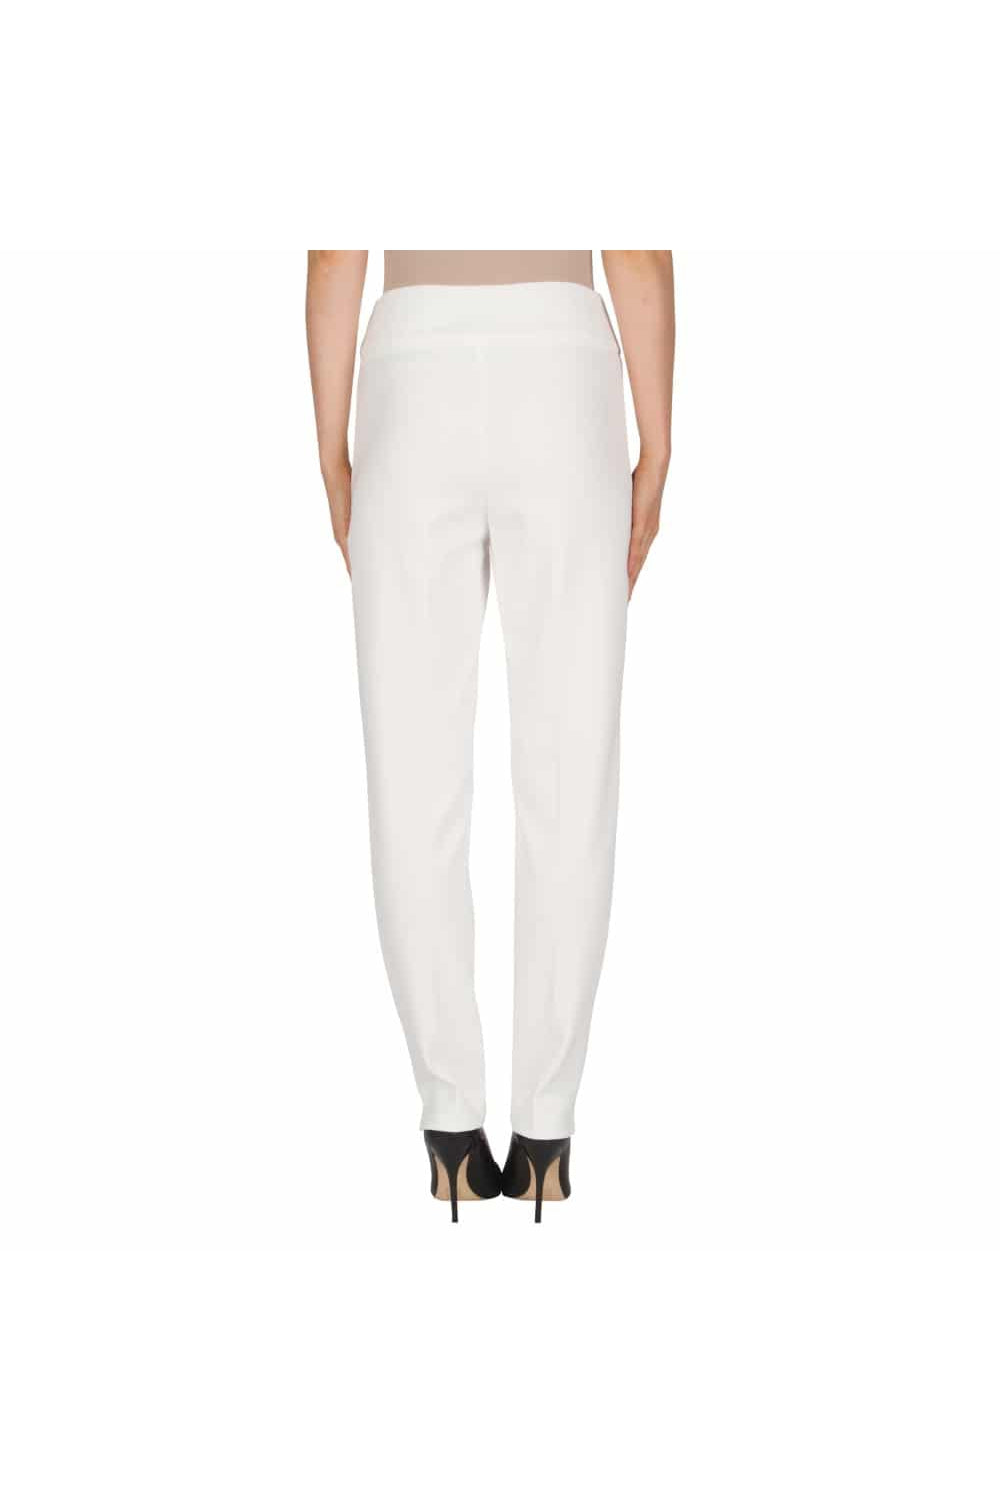 Joseph Ribkoff Pant Style 144092-W White Belle Mia Boutique